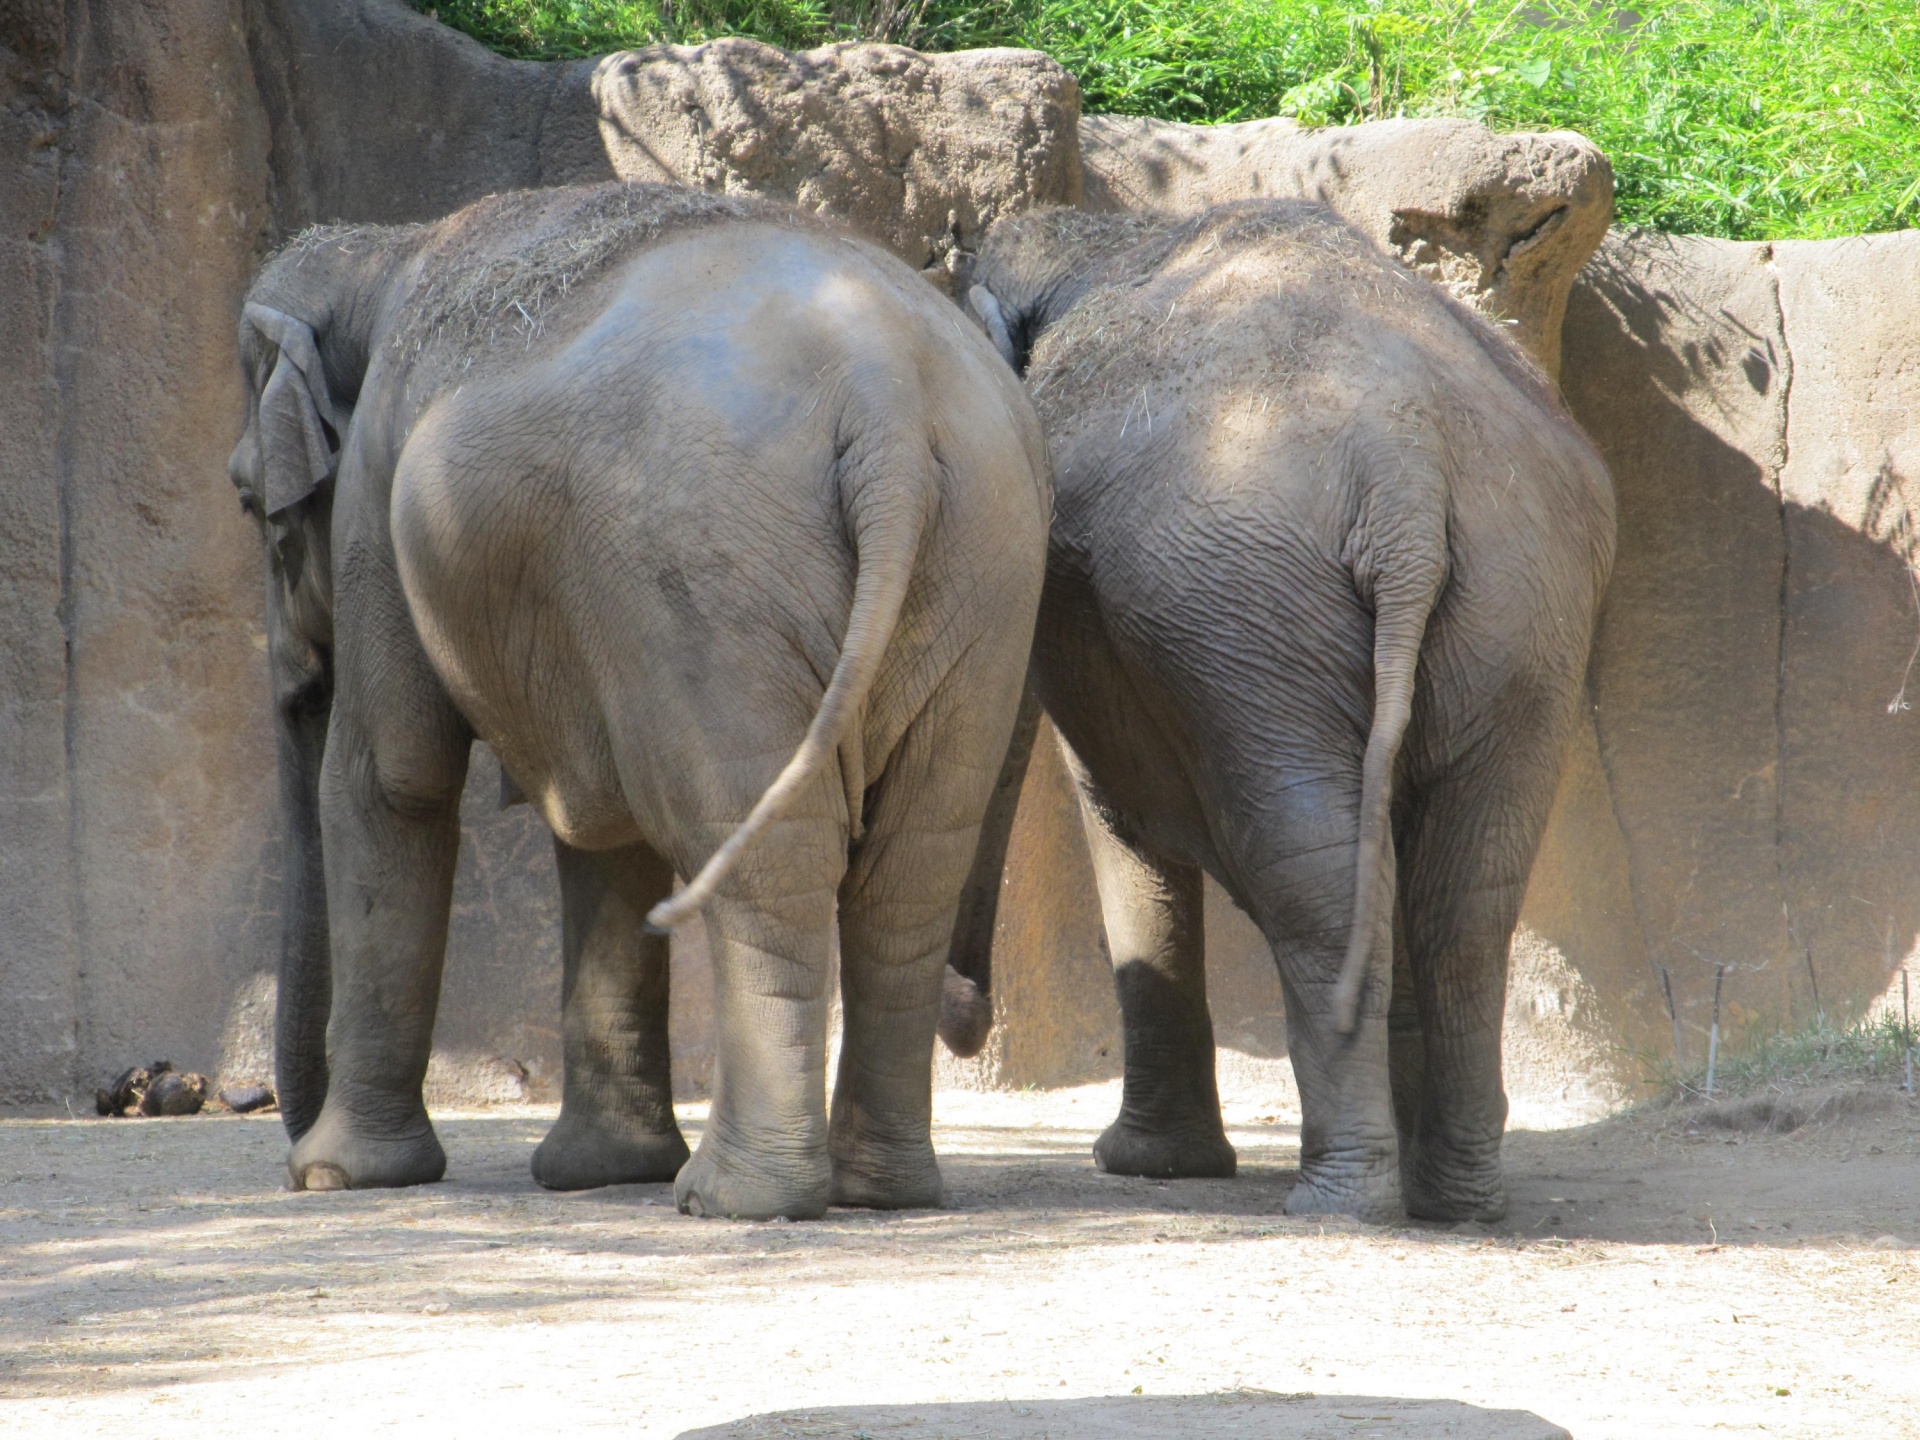 Elephants from the Rear